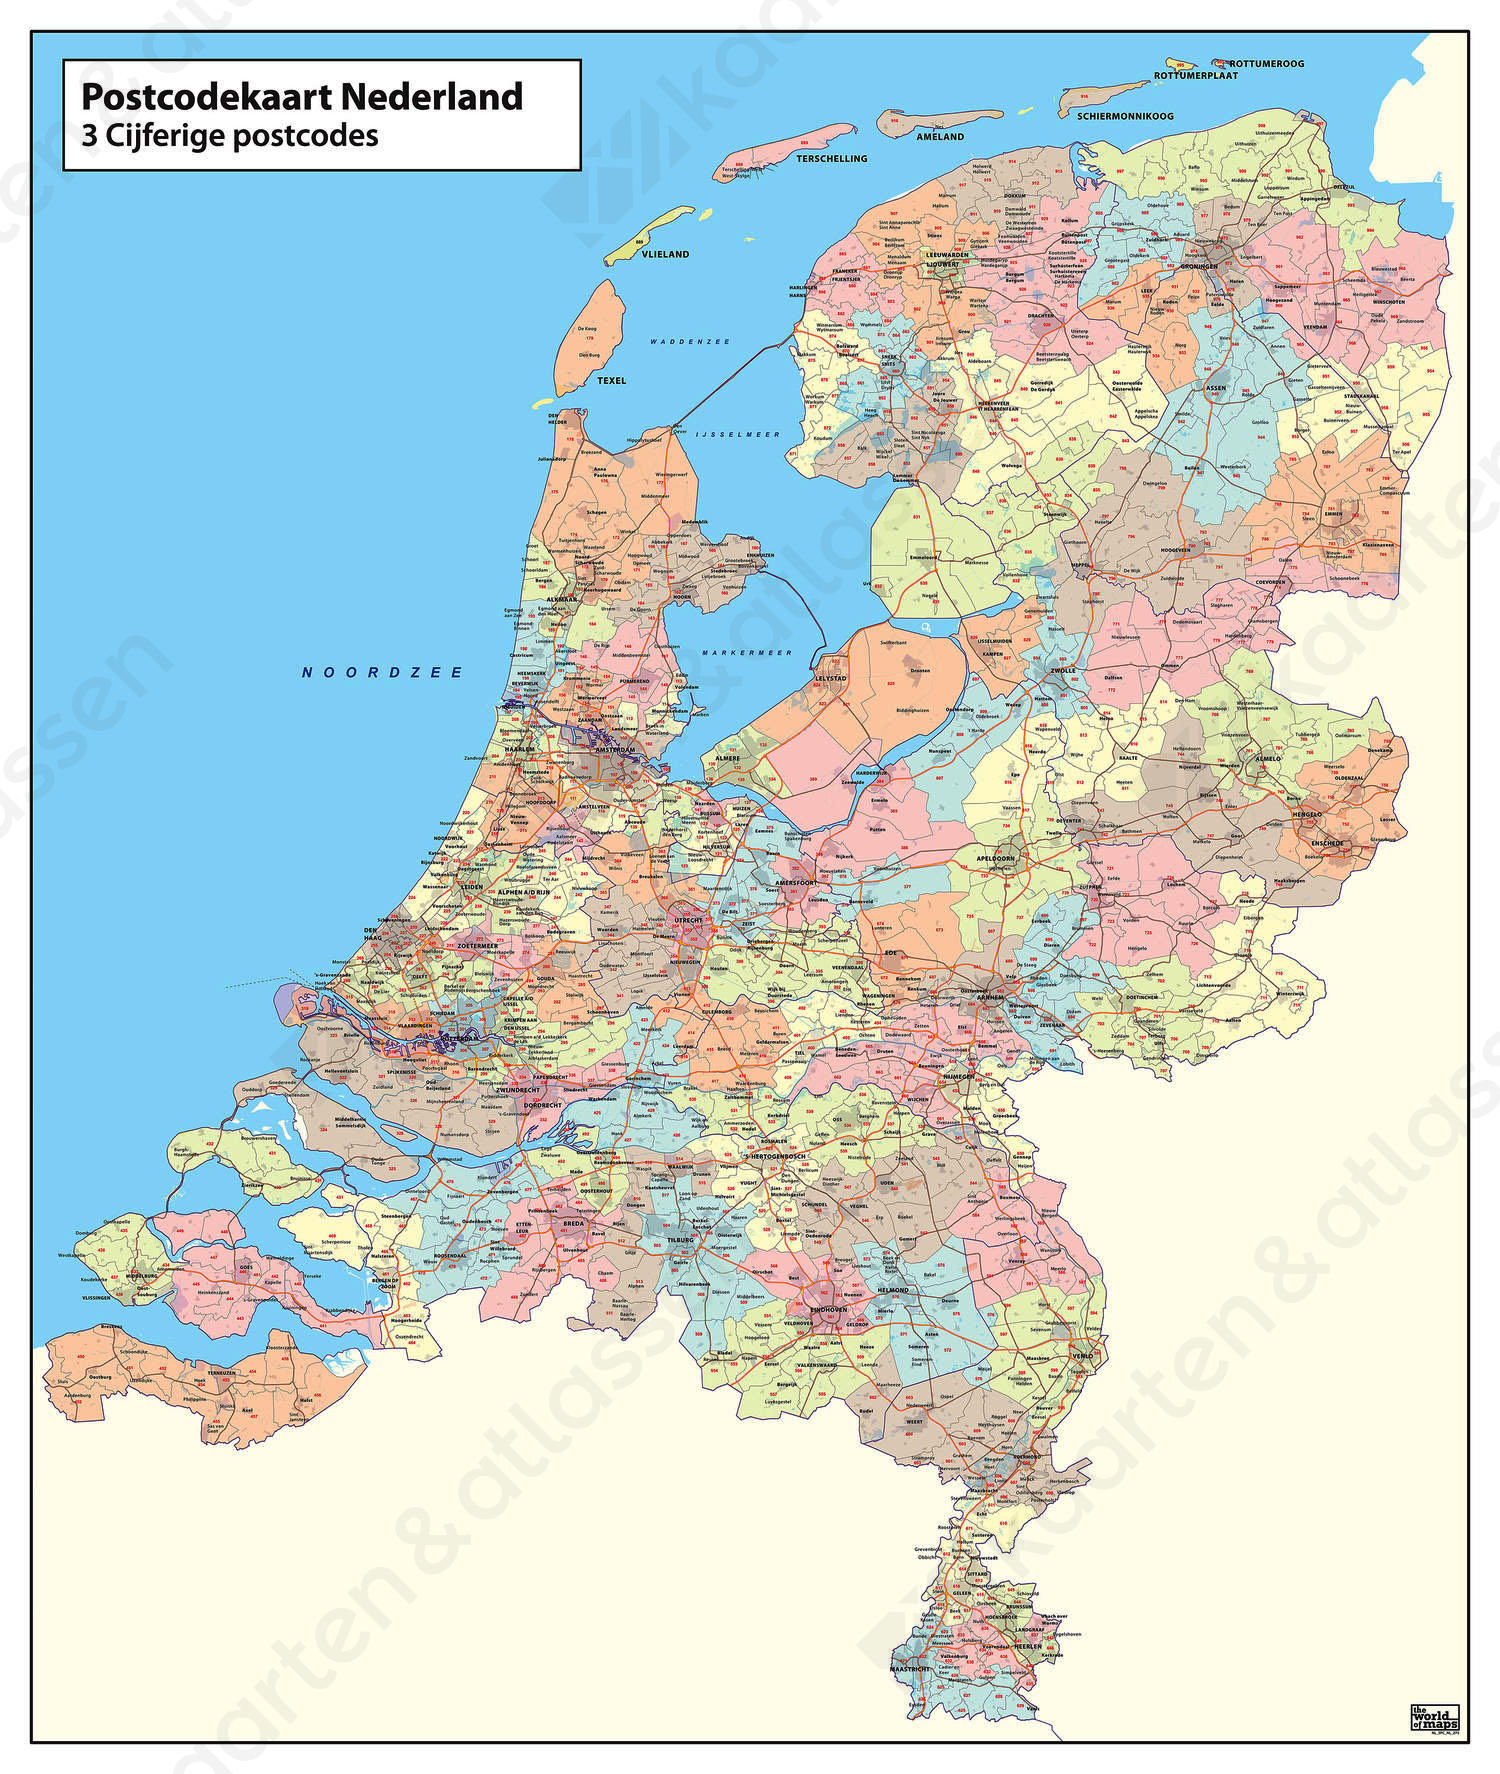 Digitale 3 Cijferige Postcodekaart Nederland 273 Kaarten En Atlassennl